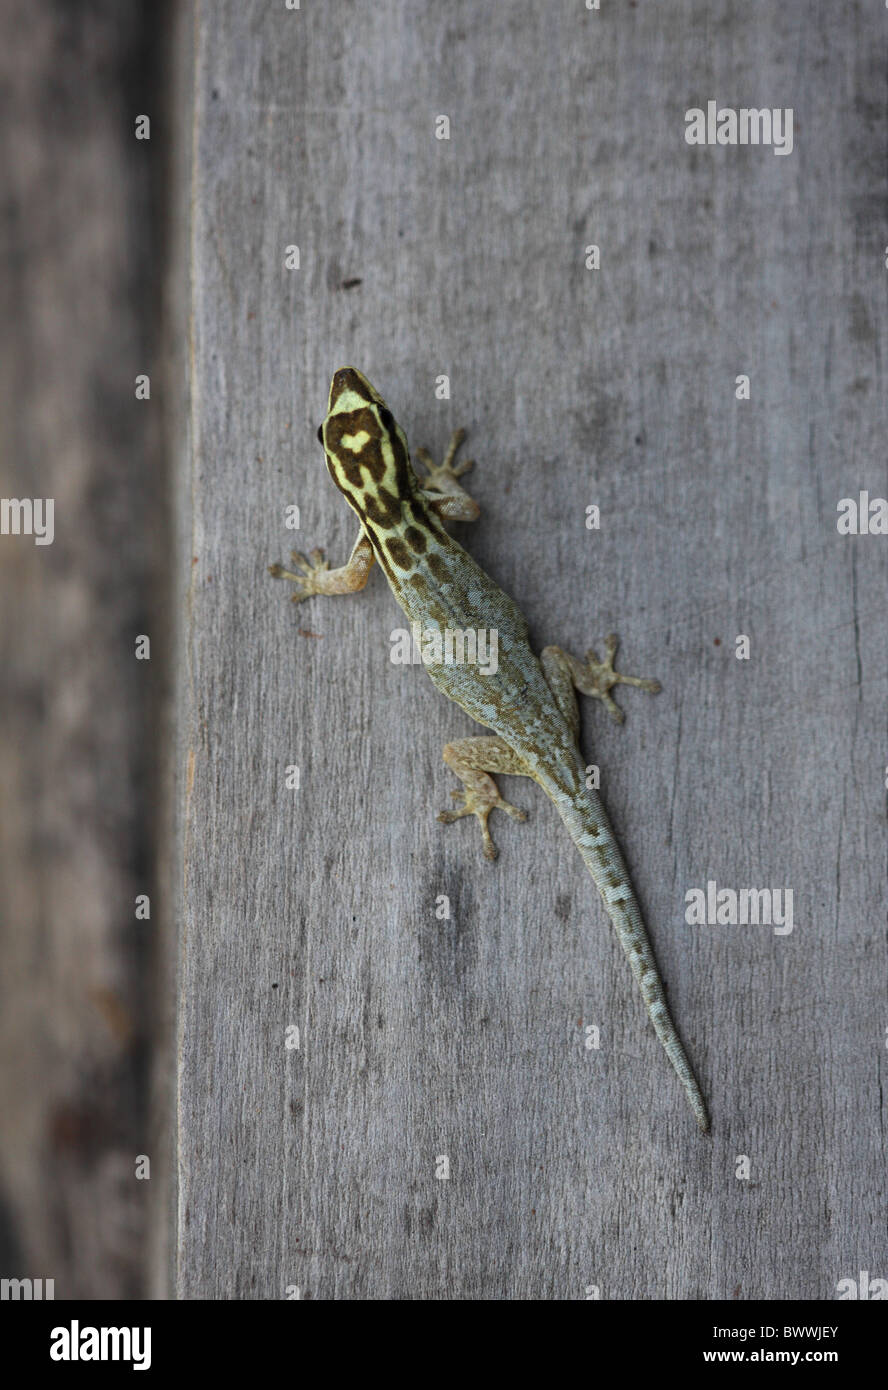 White-headed Dwarf Gecko Lygodactylus picturatus Stock Photo